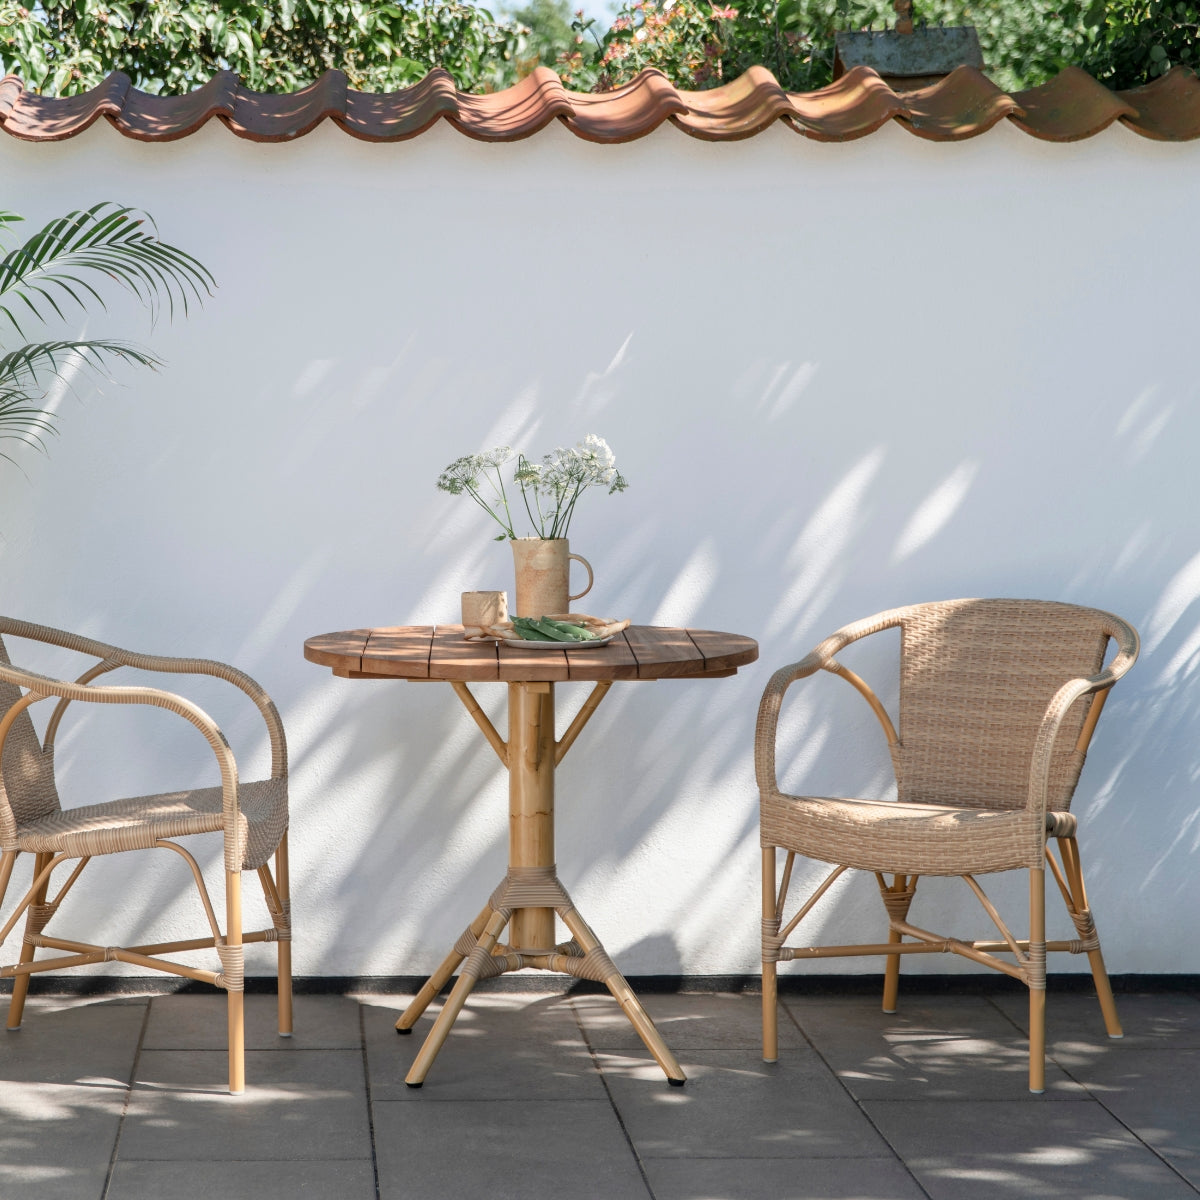 Sika-Design | Nicole Rundt Cafébord - Outdoor